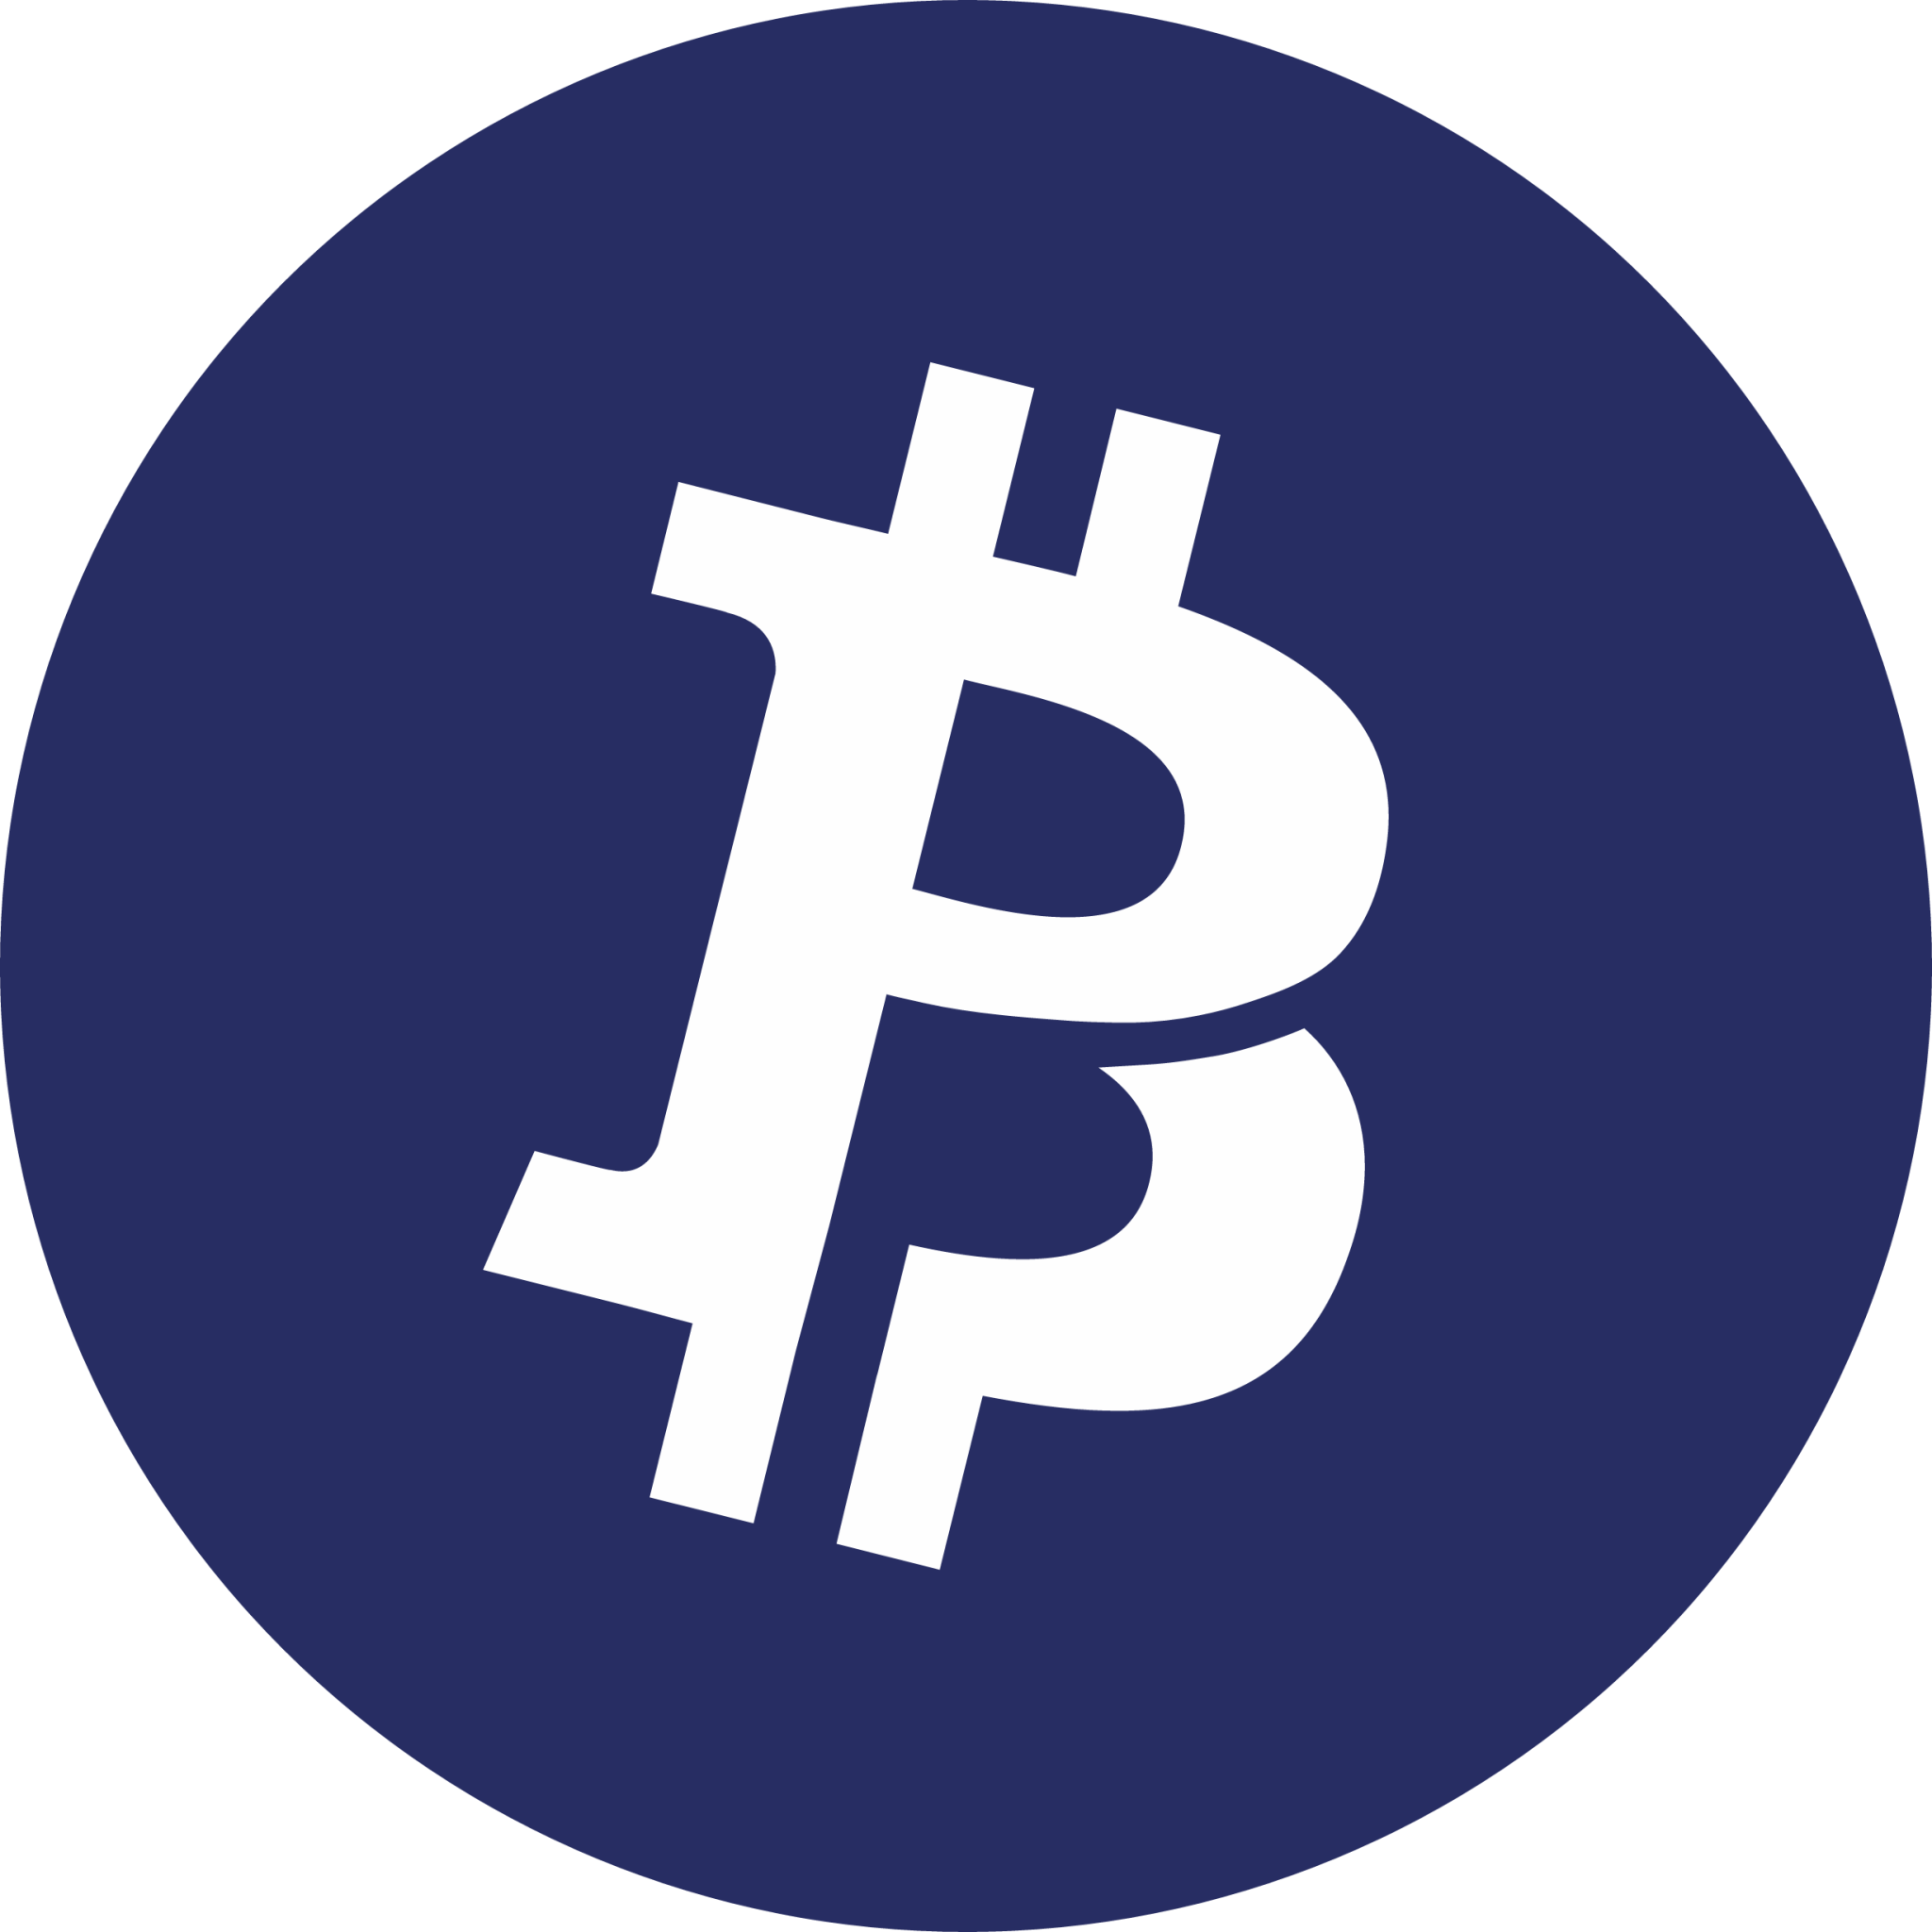 Bitcoin Private Cryptocurrency icon